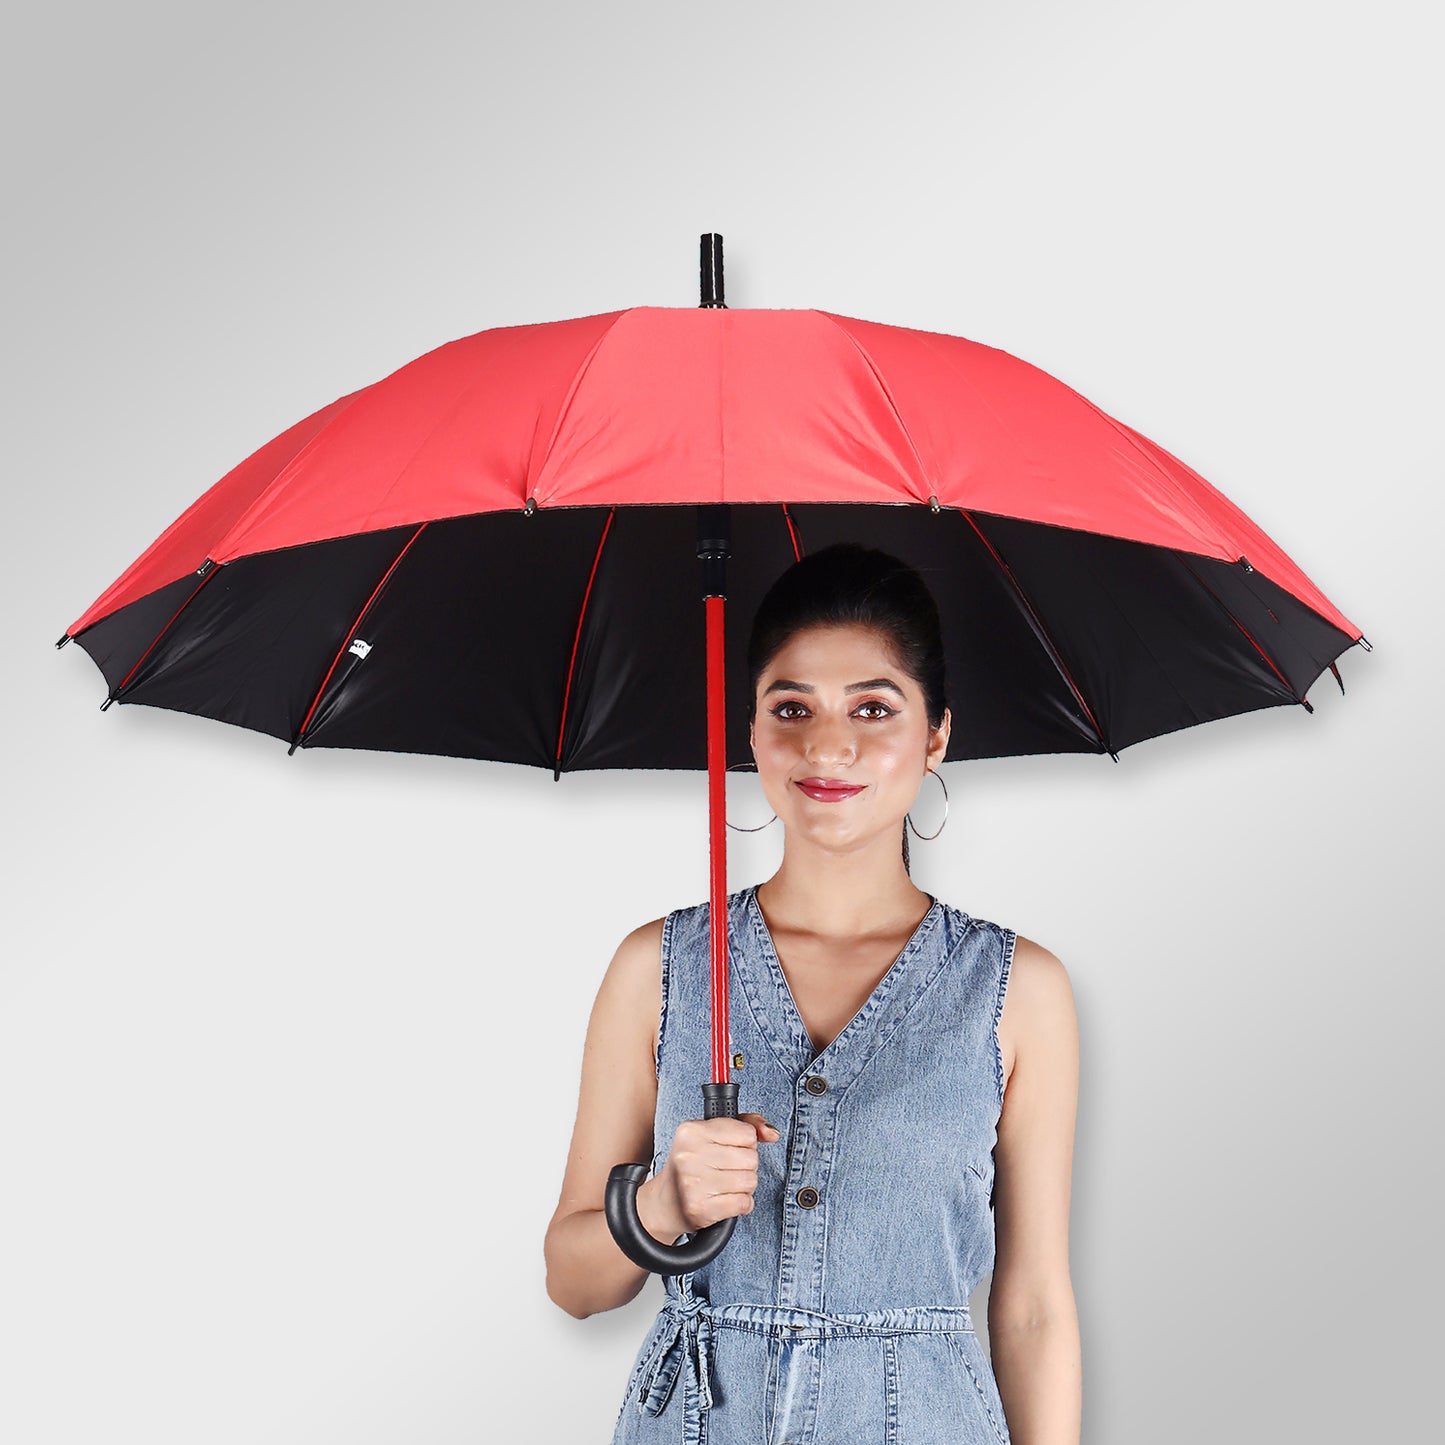 SUPERSTAR | Automatic Open Fashion Umbrella - Red